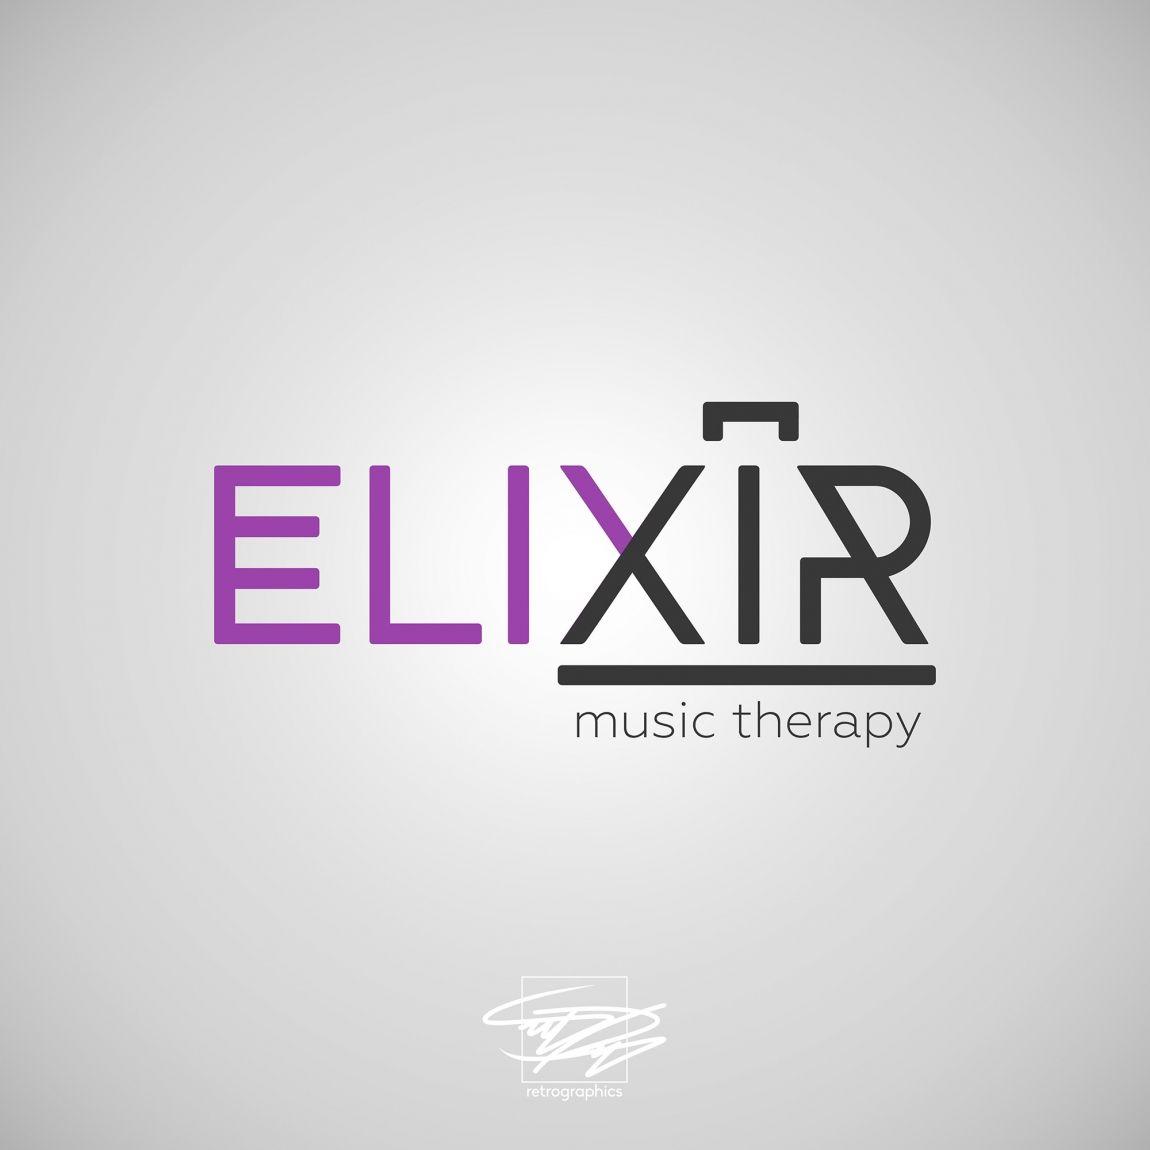 Elixir Logo - ELIXIR logo. The Art of Dmitry Blagorodov. Concept Art